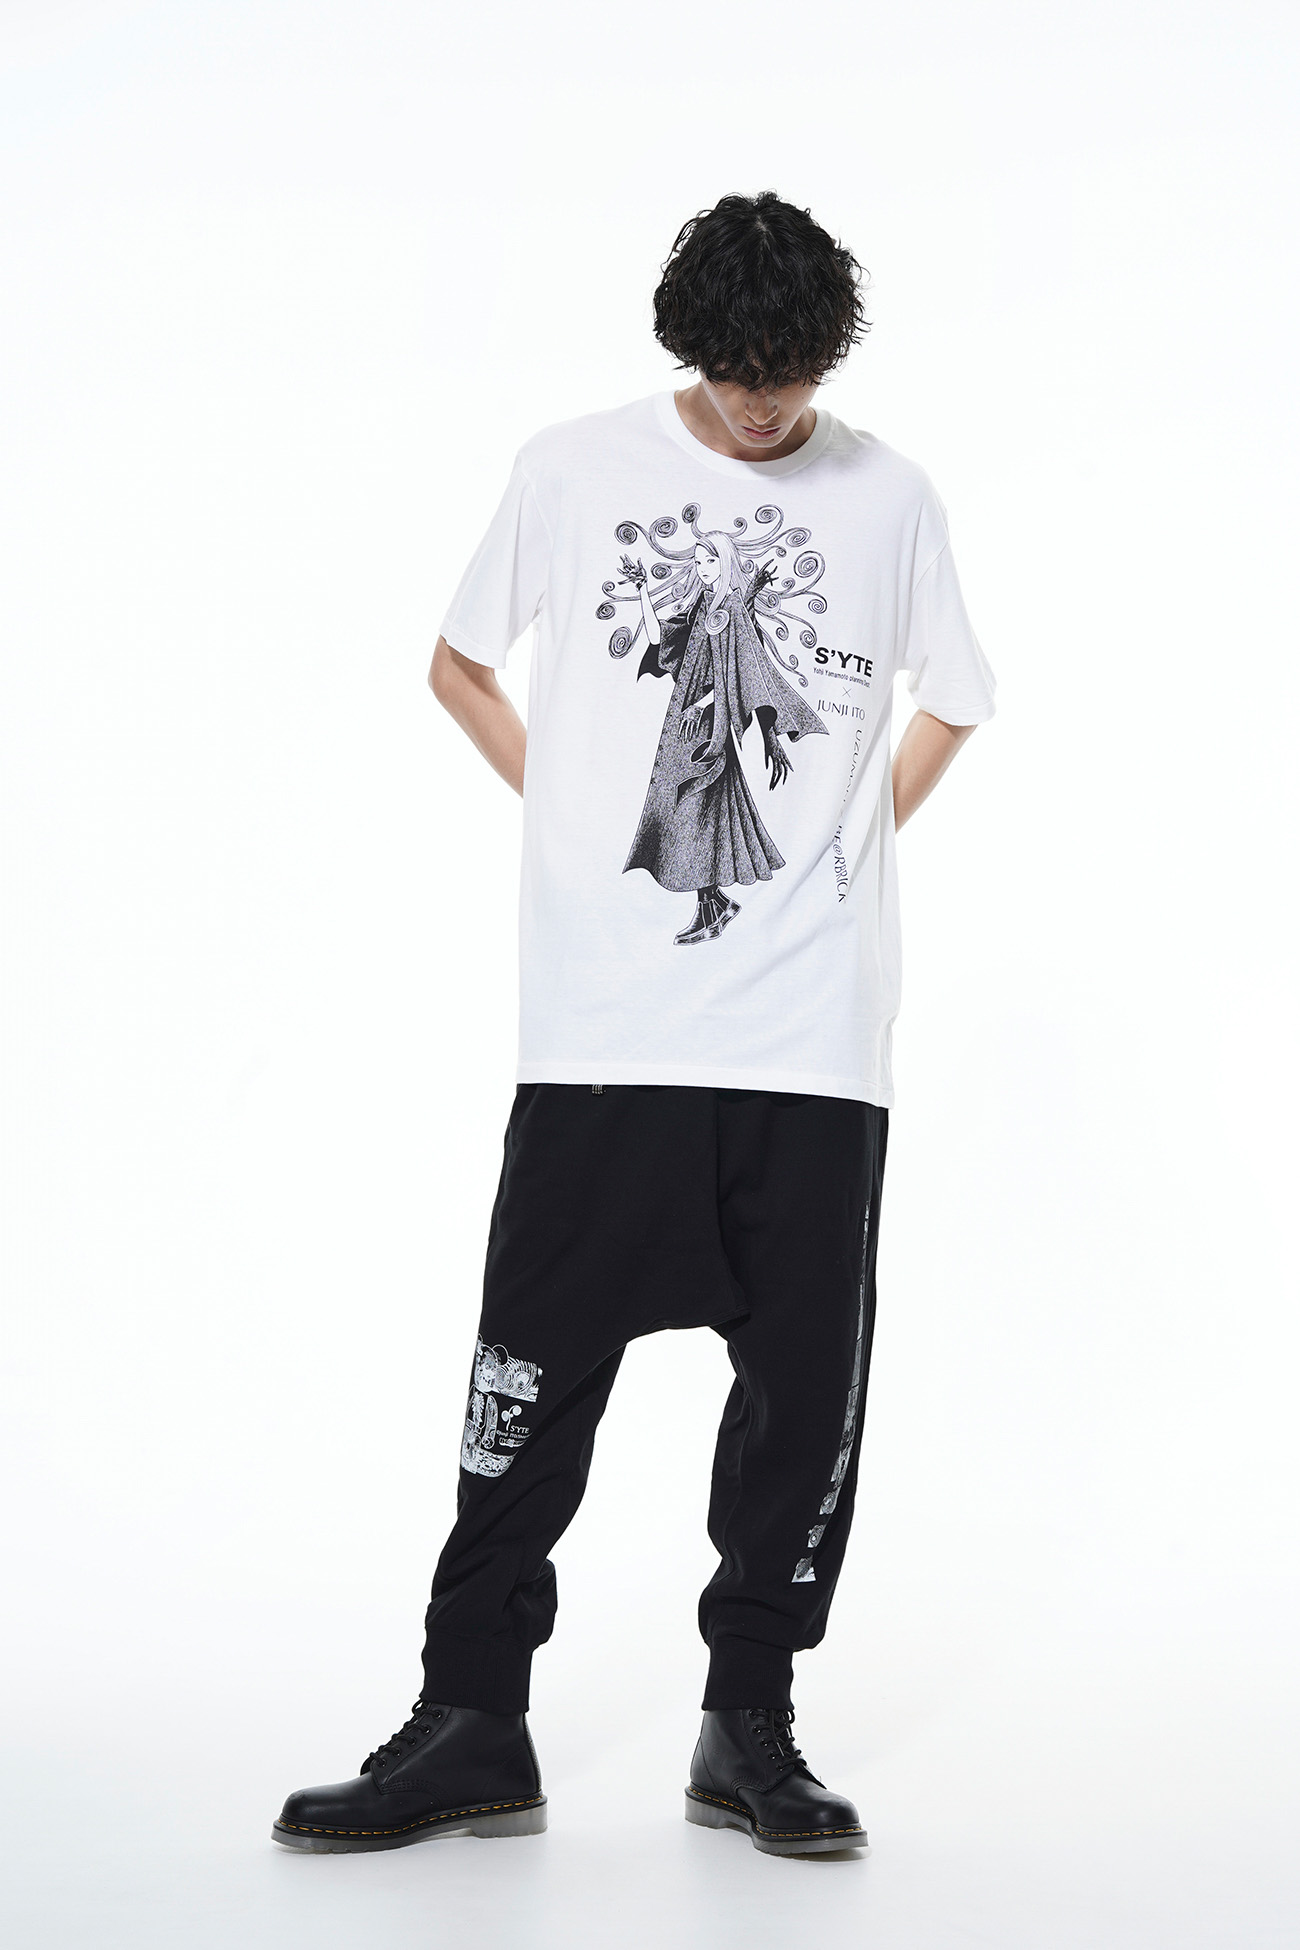 【8/25 12:00発売】BE@RBRICK × Junji ITO"Kirie" Uzumaki Wearing Yohji Yamamoto T-shirt